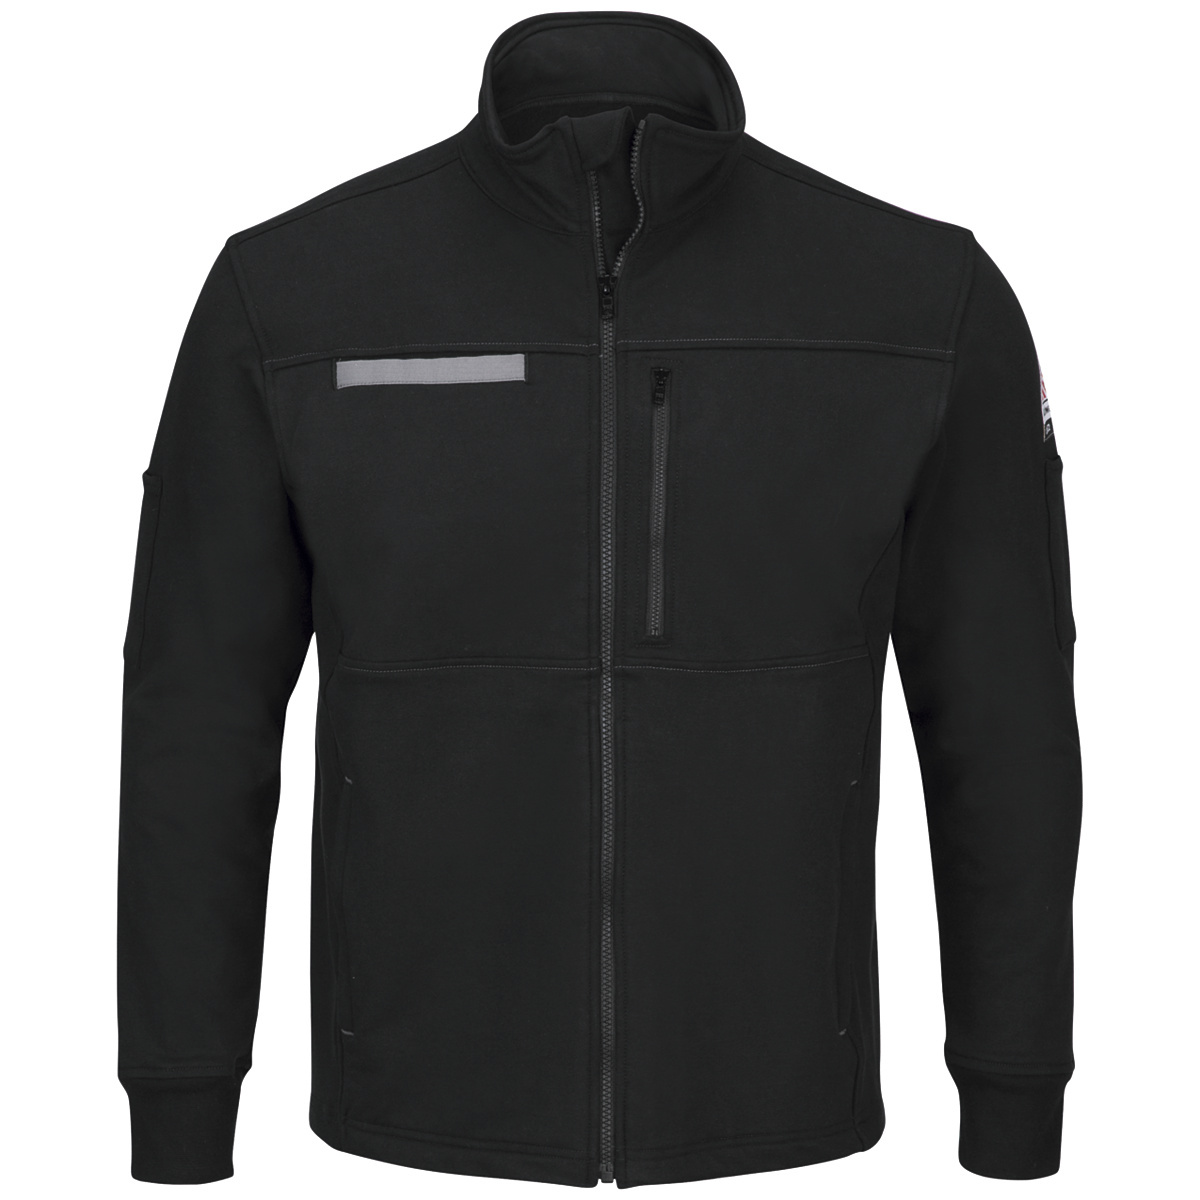 Bulwark® 2X Regular Black Cotton/Spandex Flame Resistant Jacket With Zipper Front Closure